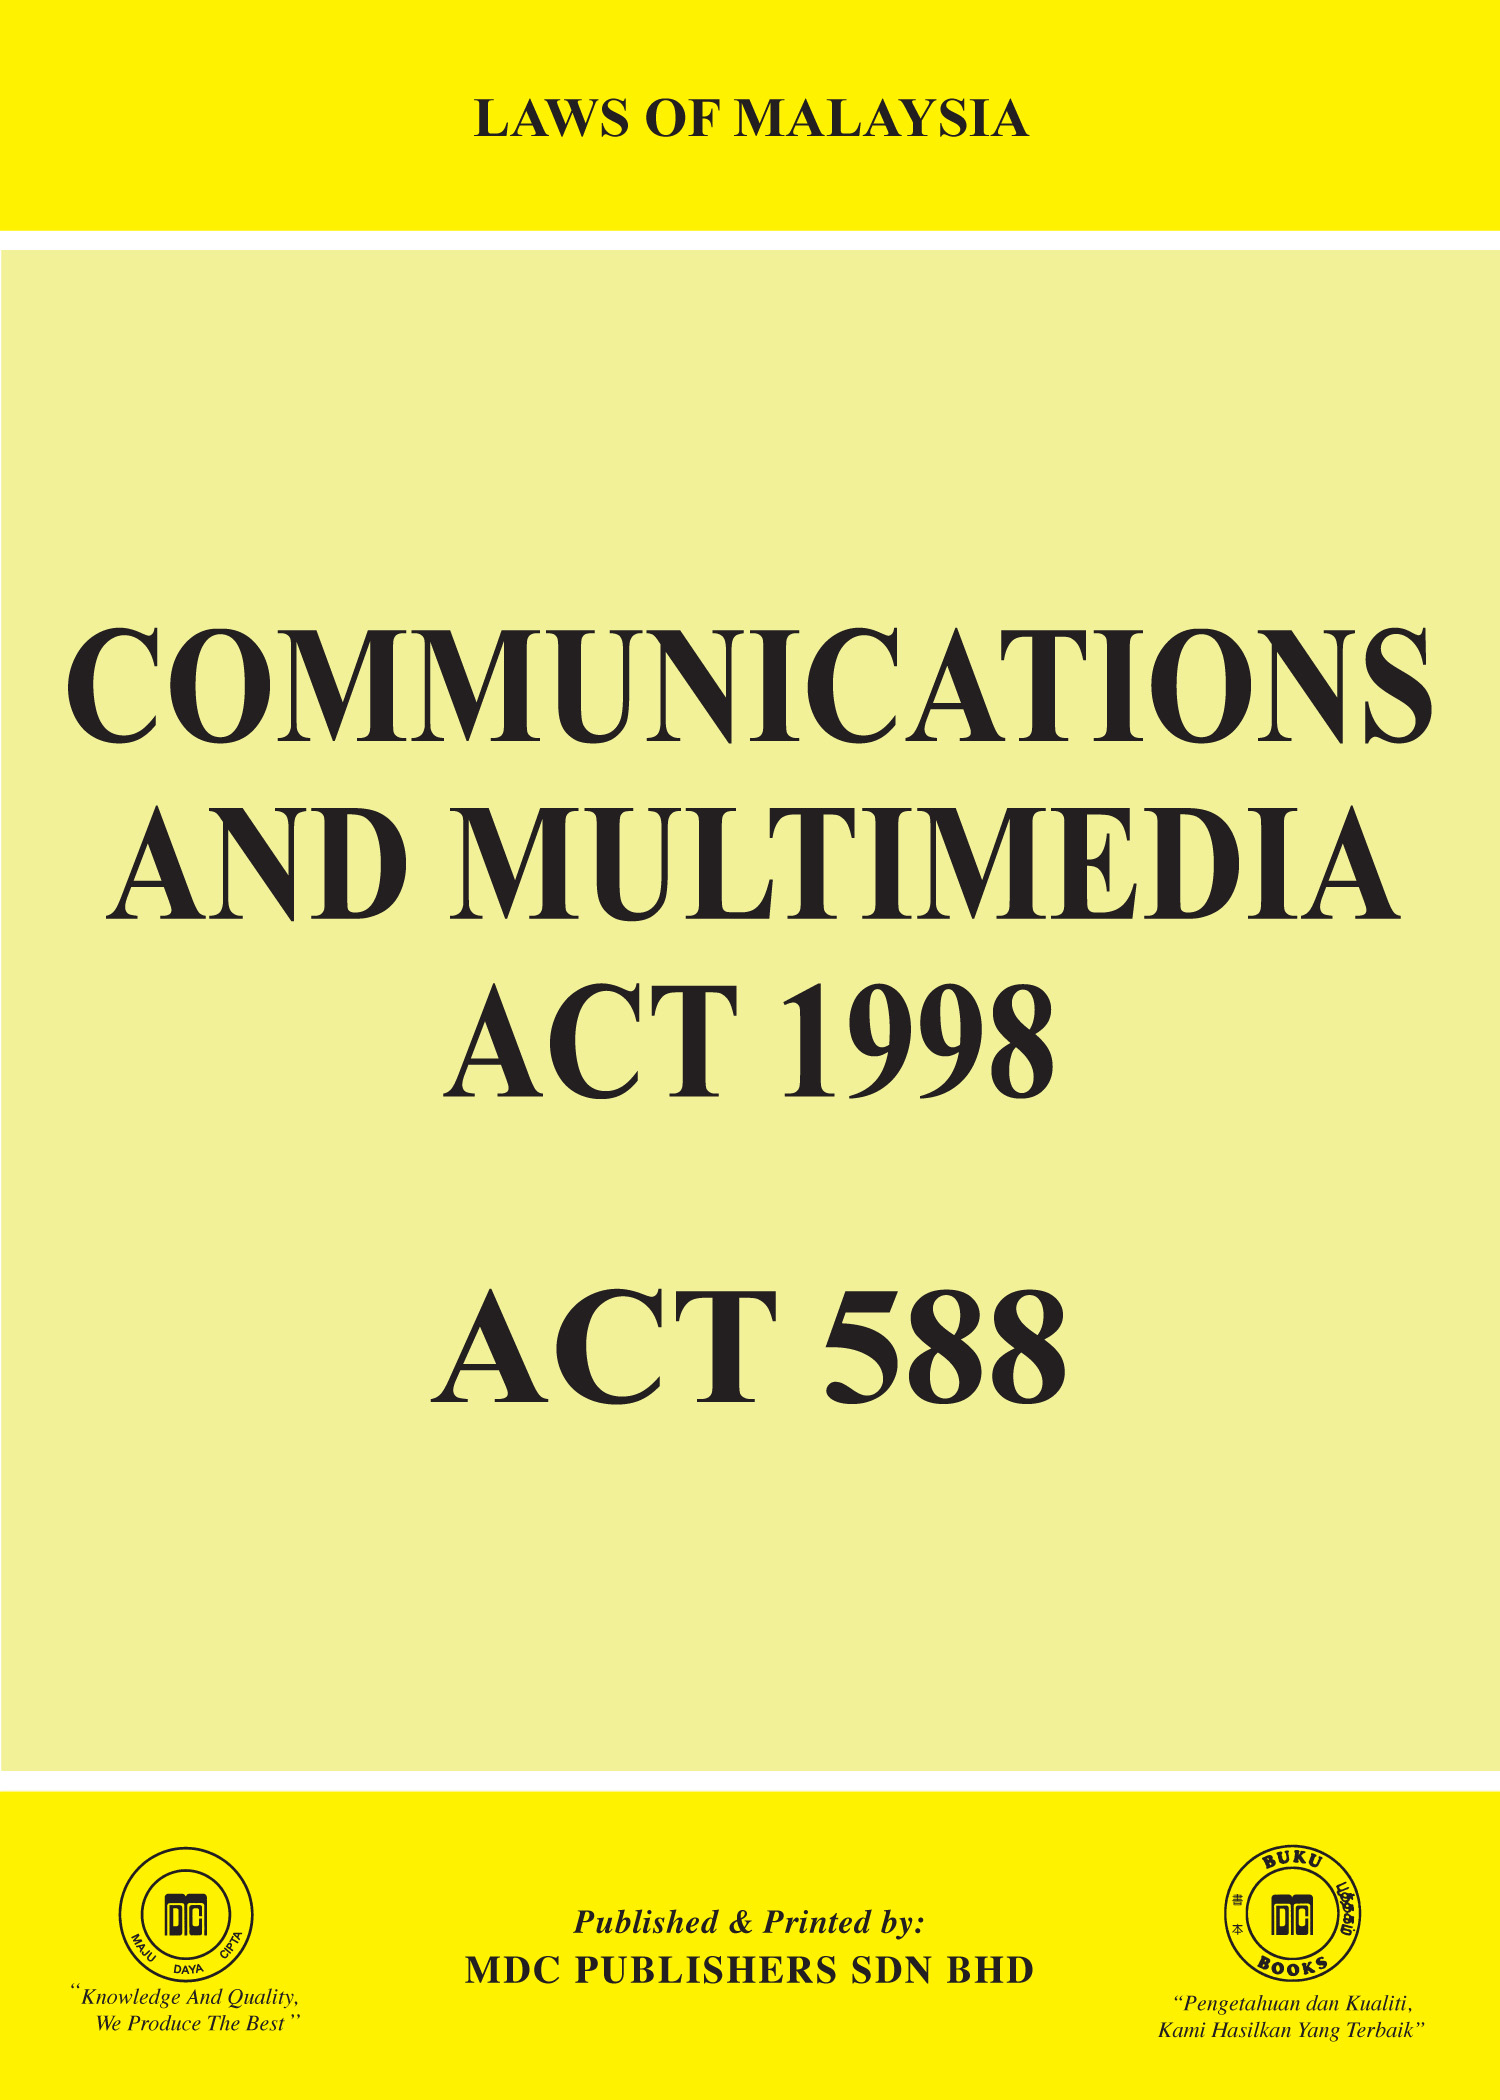 Act 1998 communications and multimedia MCMC blocks